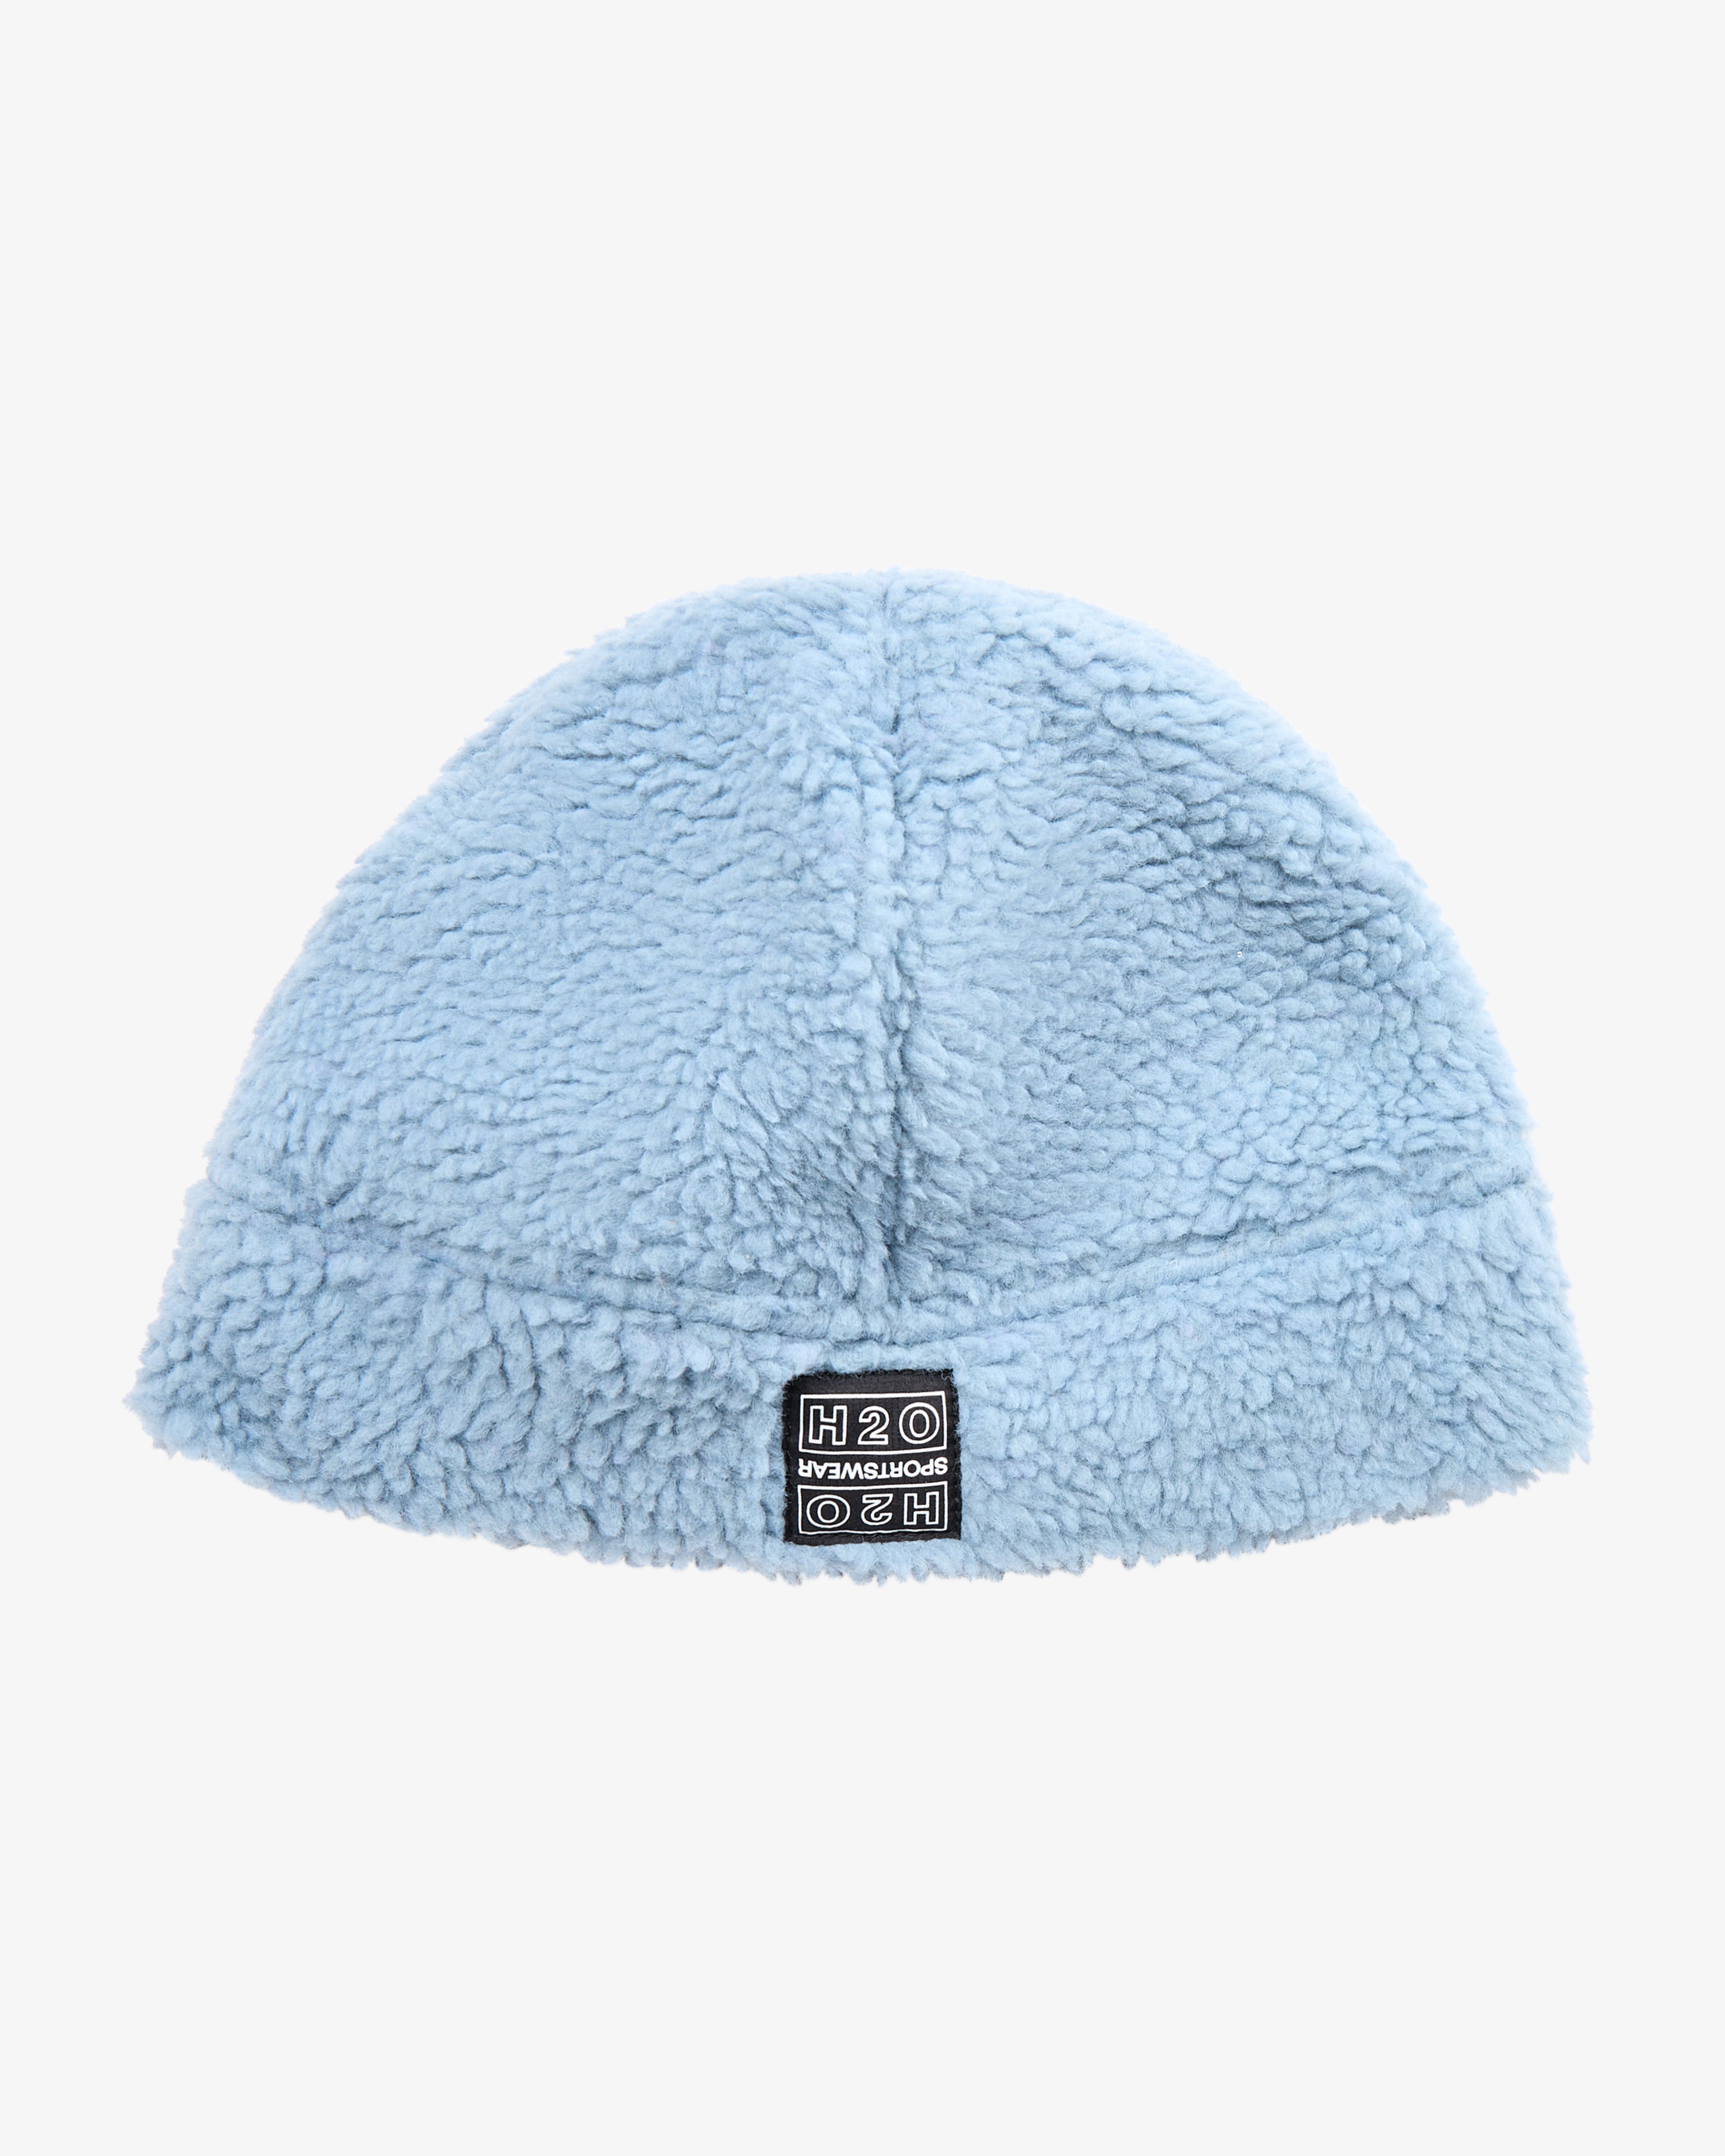 Langli Pile Hat - Stone Blue